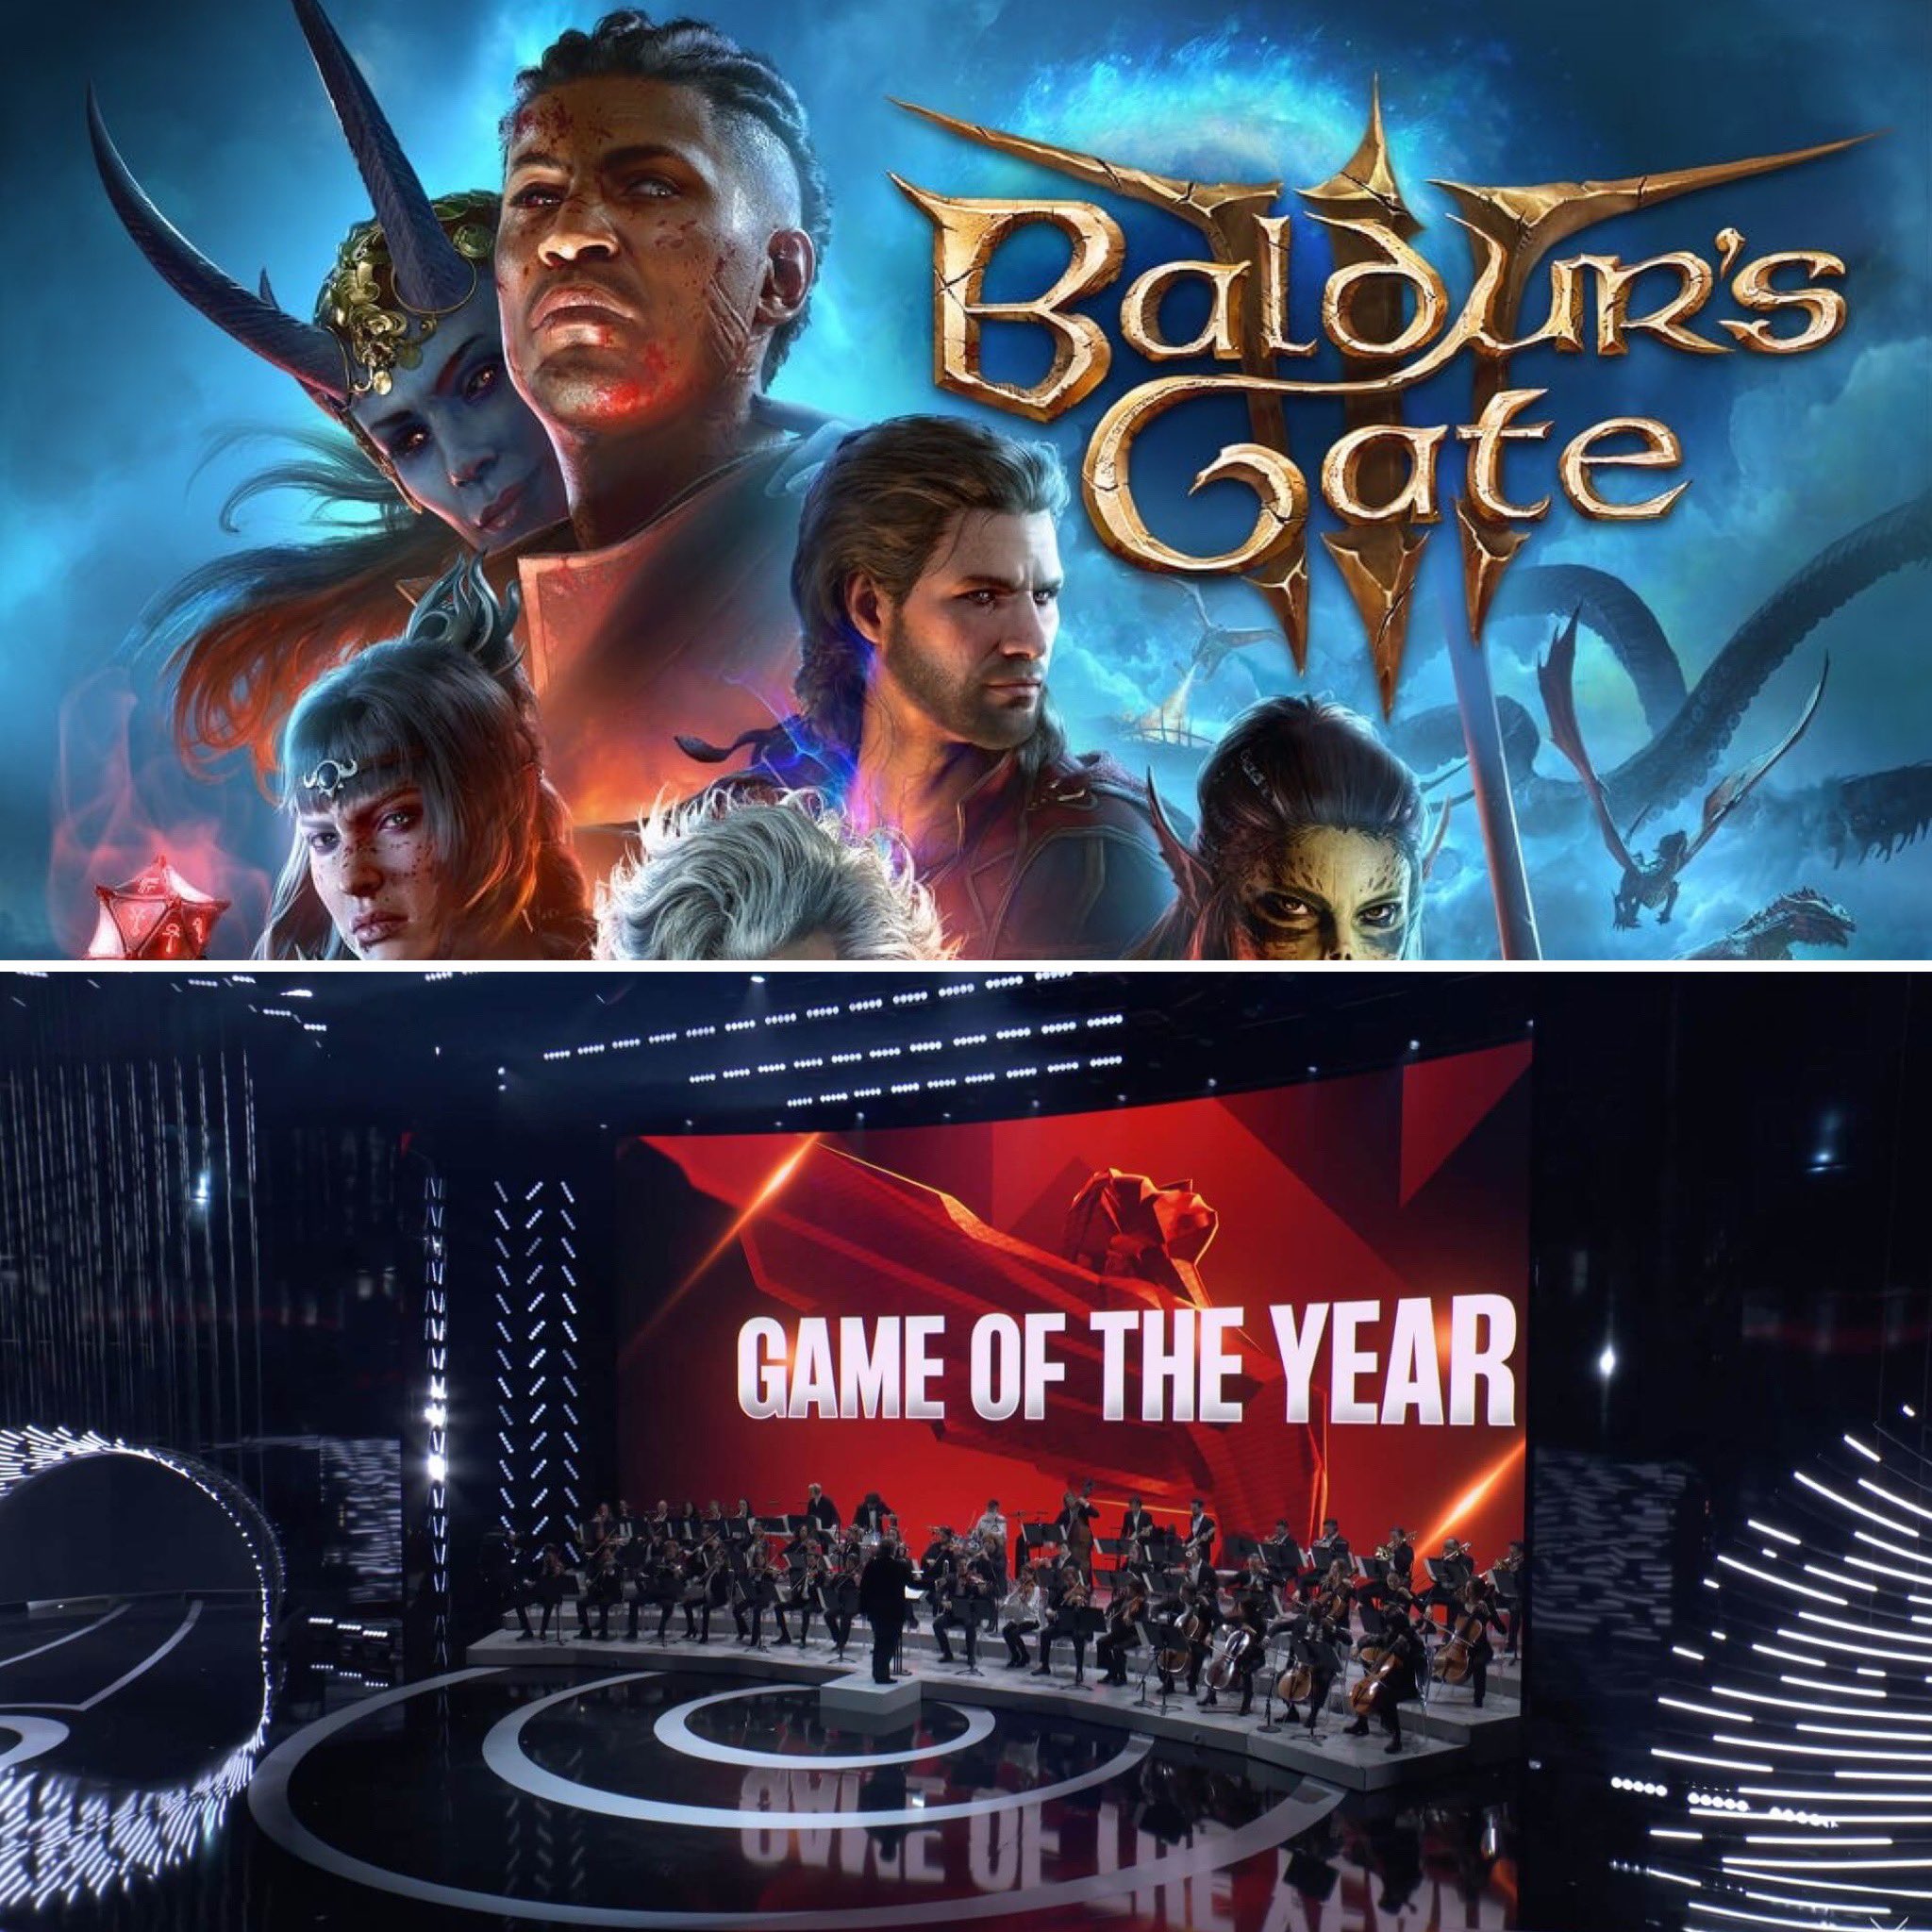 🏆 The Game Awards 2023 - LISTA de INDICADOS ao GOTY de 2023 - AO